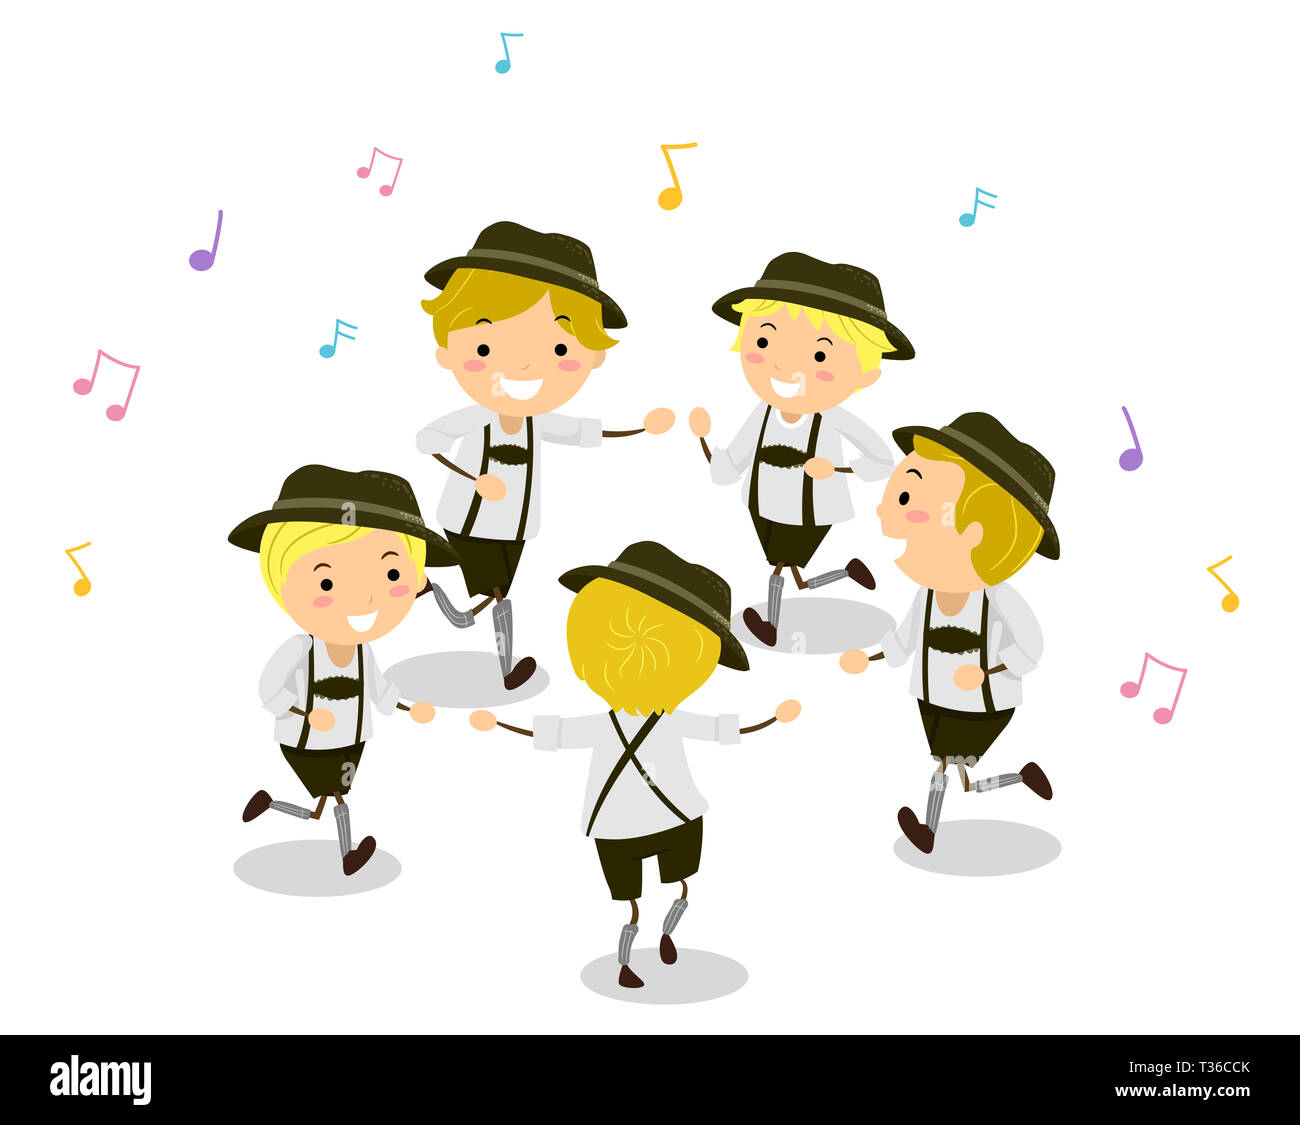 Illustrazione di Stickman Kids in Costume Dancing Schuhplattler con note  musicali intorno Foto stock - Alamy